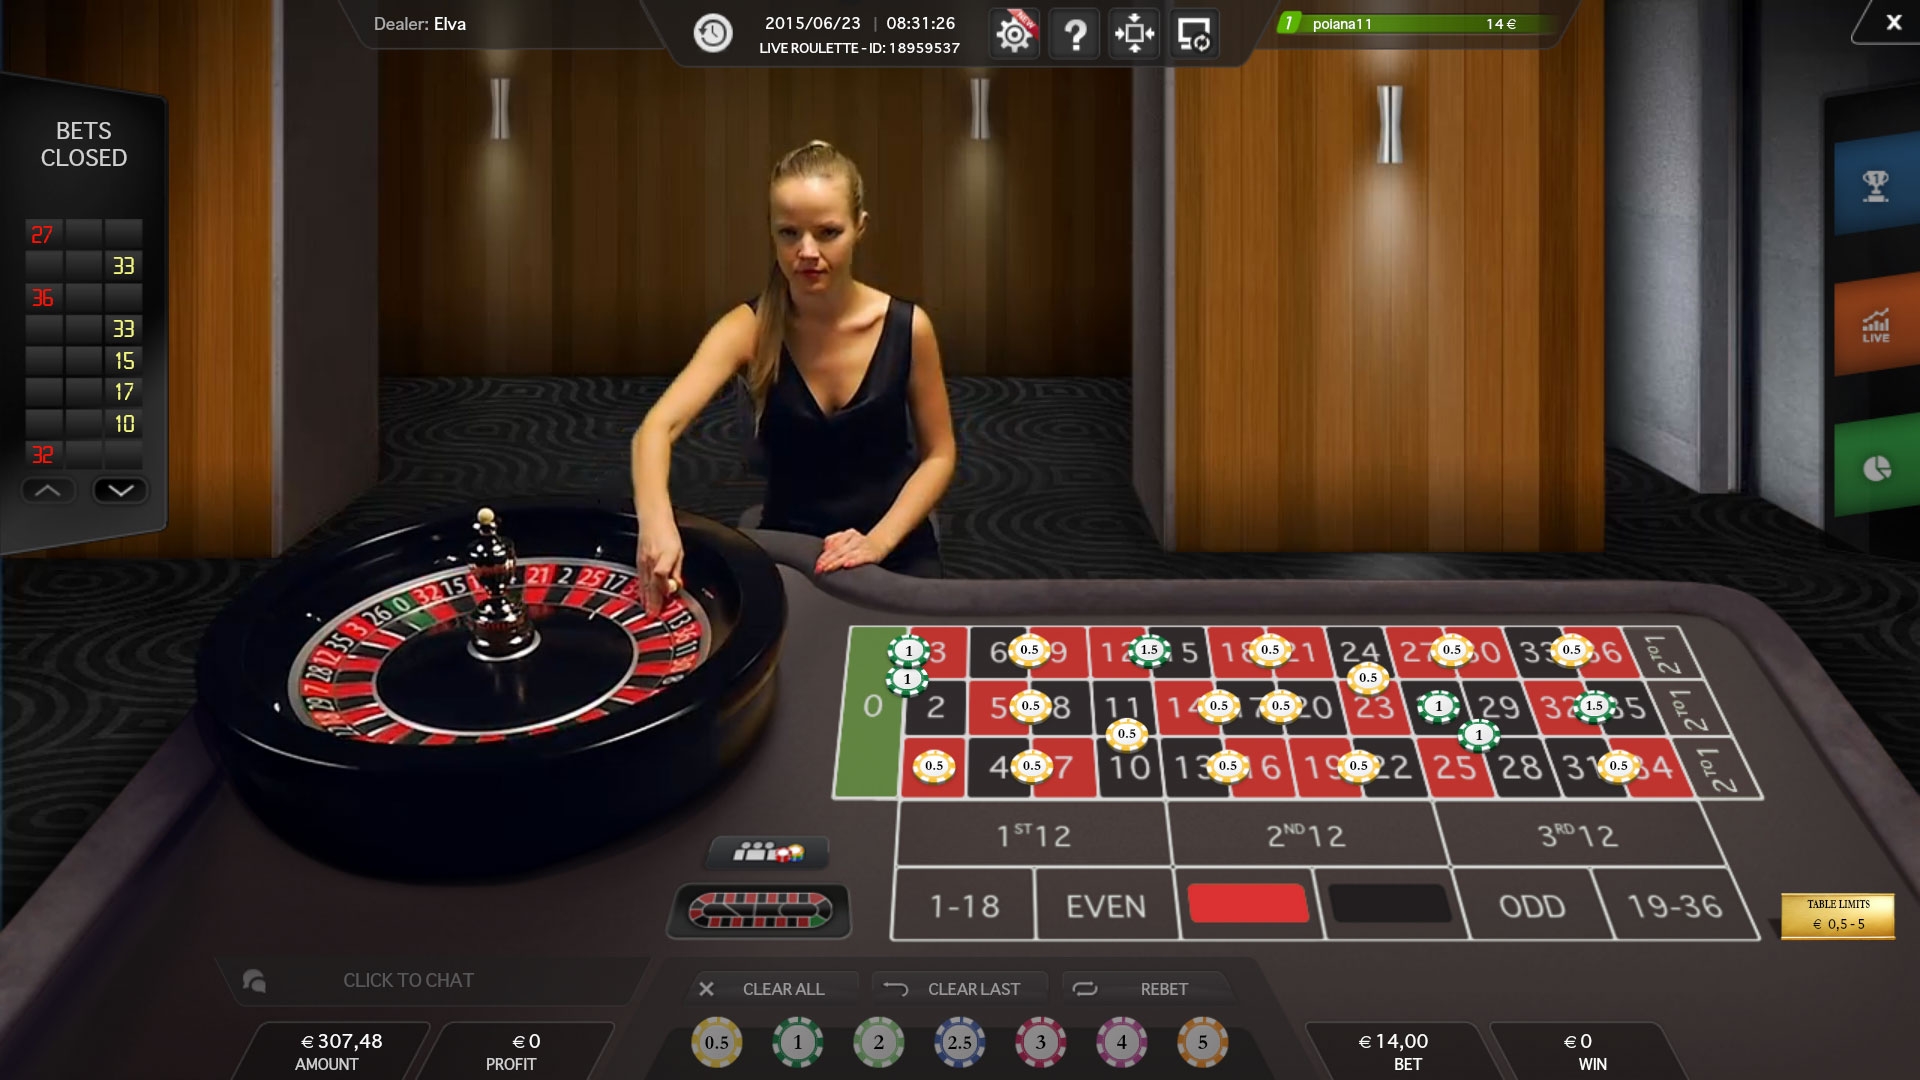 live casino online casino